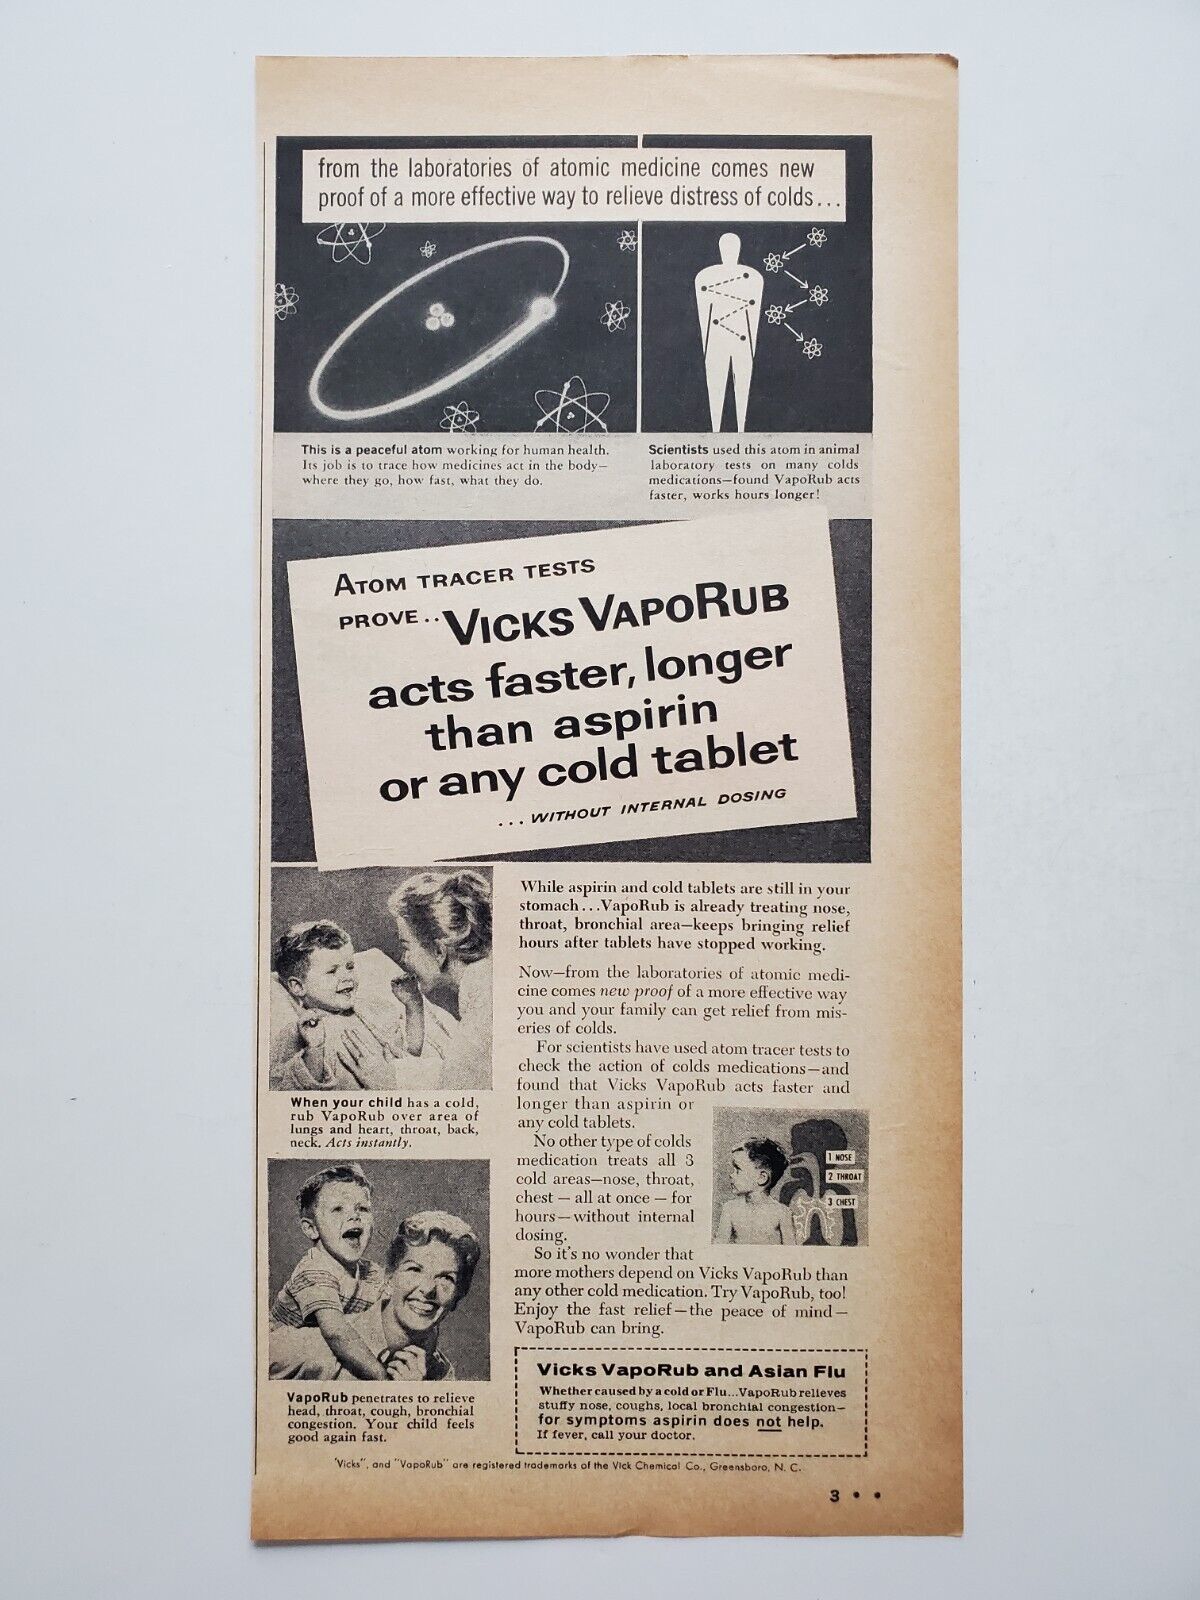 Vicks VapoRub Atom Tracer Tests Cold/Flu Relief Mom/Child 1958 Vintage Print Ad